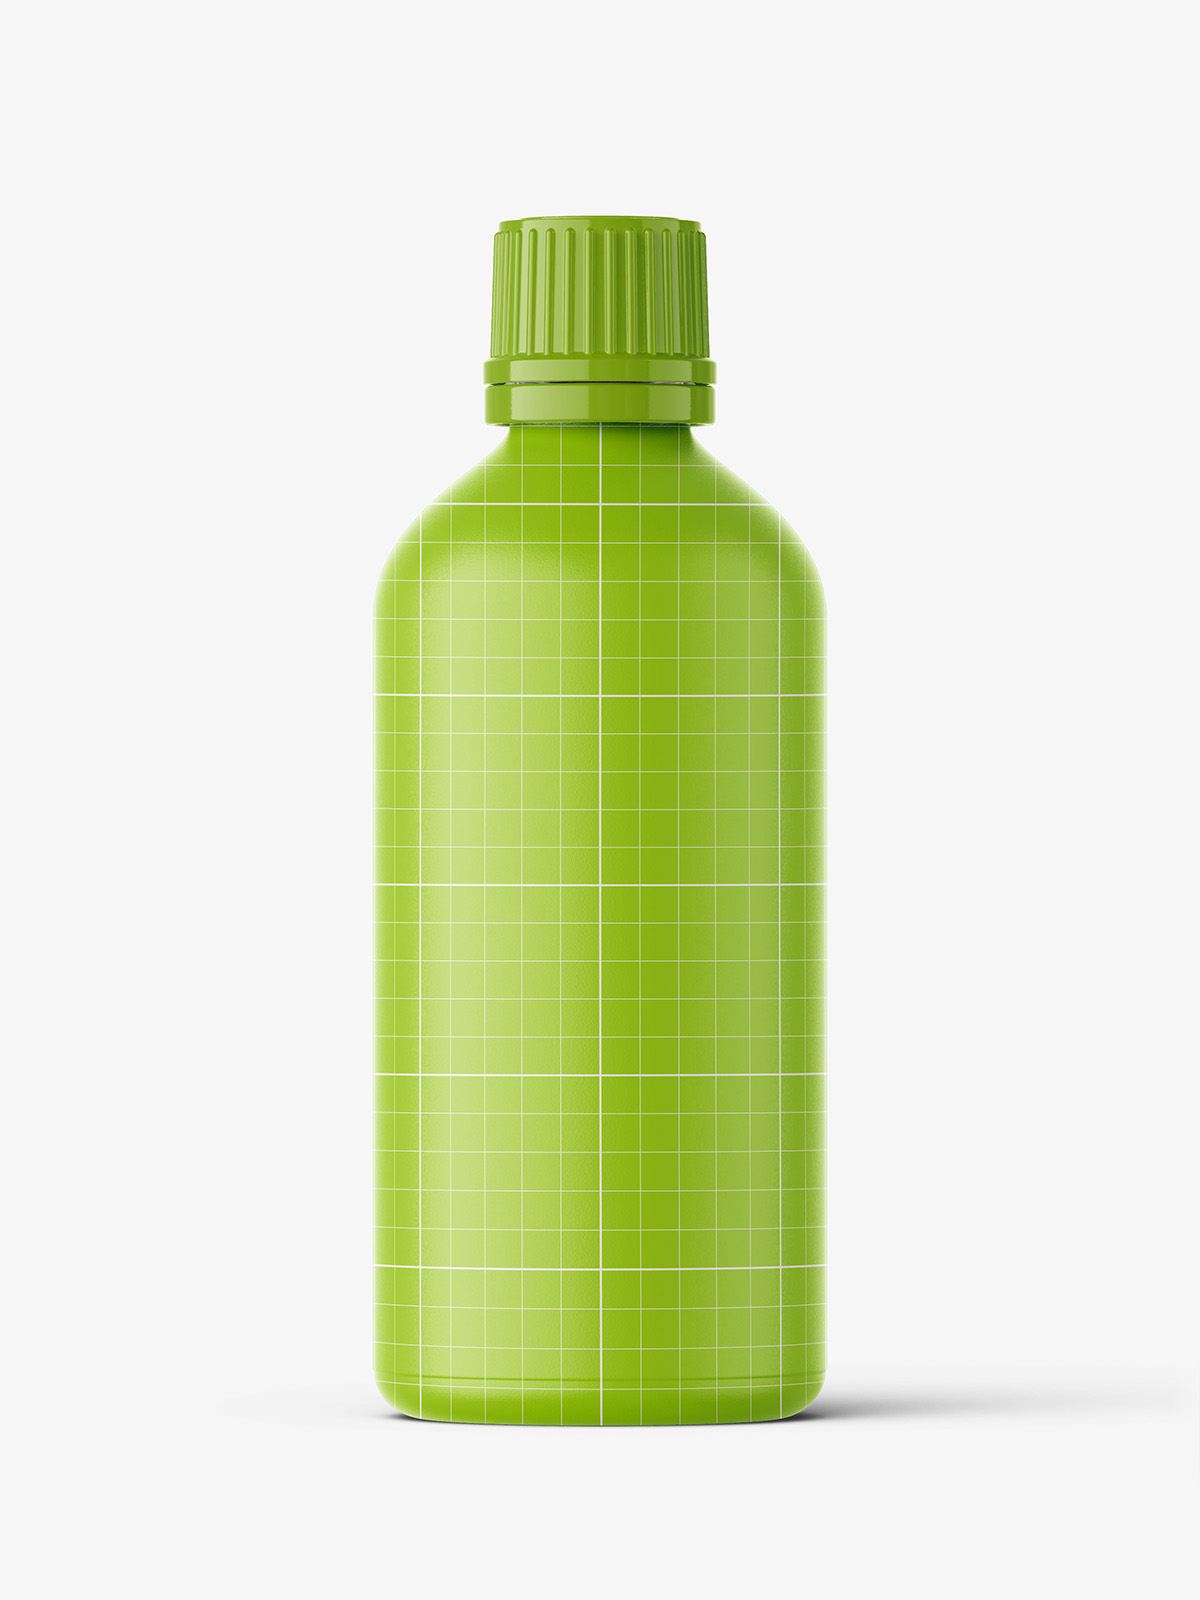 Download Pharmaceutical 100ml bottle mockup / amber - Smarty Mockups